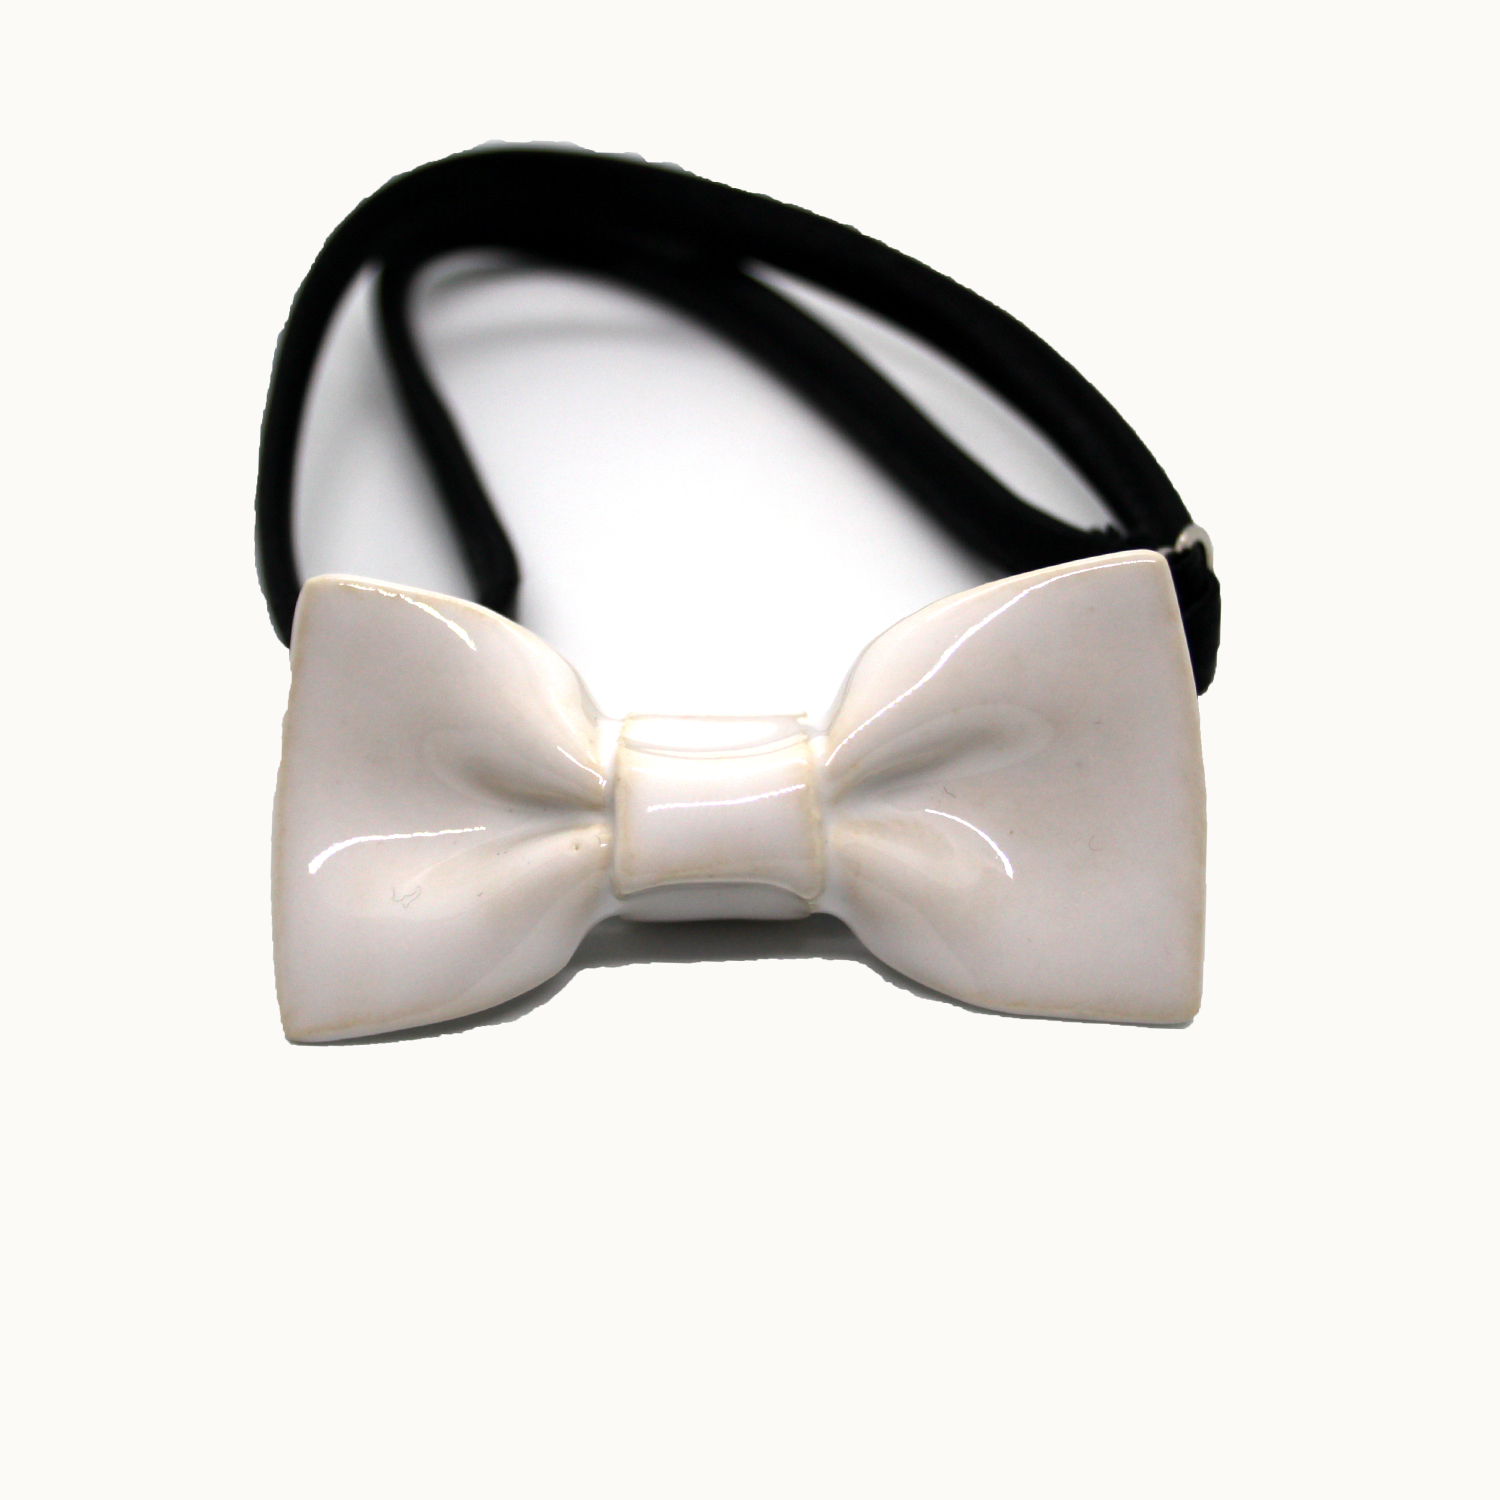 Pajarita de cerámica mini Bowtery blanca para niños adultos minimalistas y bailar vals. Handmade ceramic mini bow tie white for kids minimalist and dancers